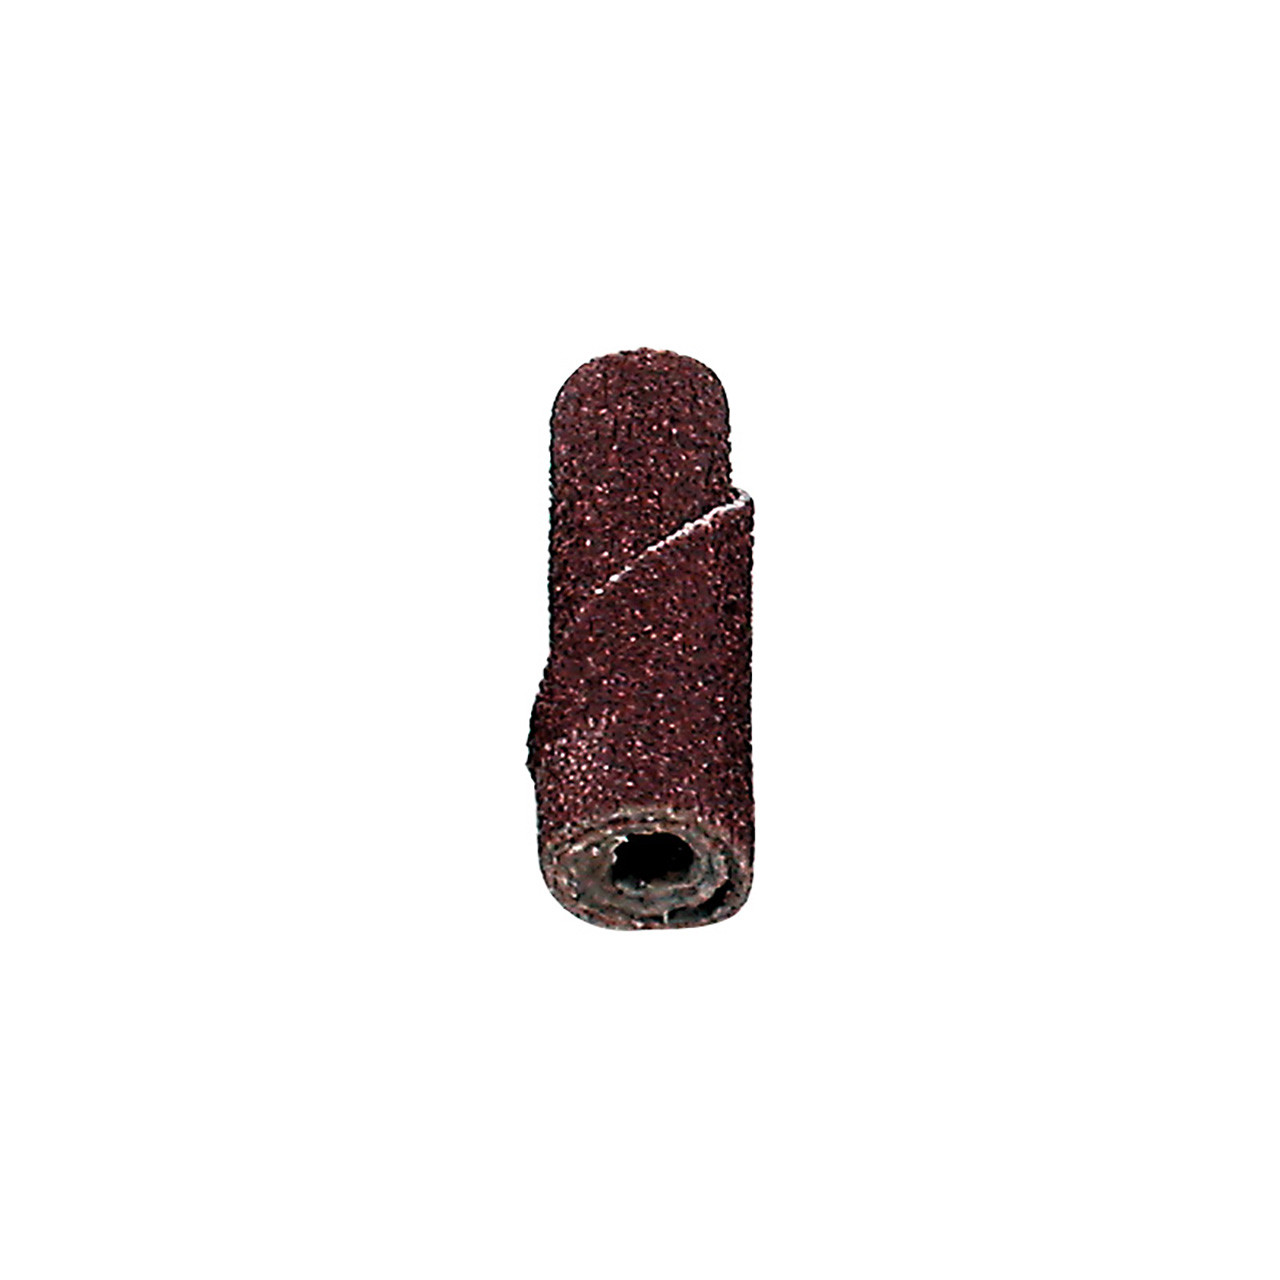 Abrasive Cartridge Rolls - 1/4" x 3/4" x 1/8", 120 Grit